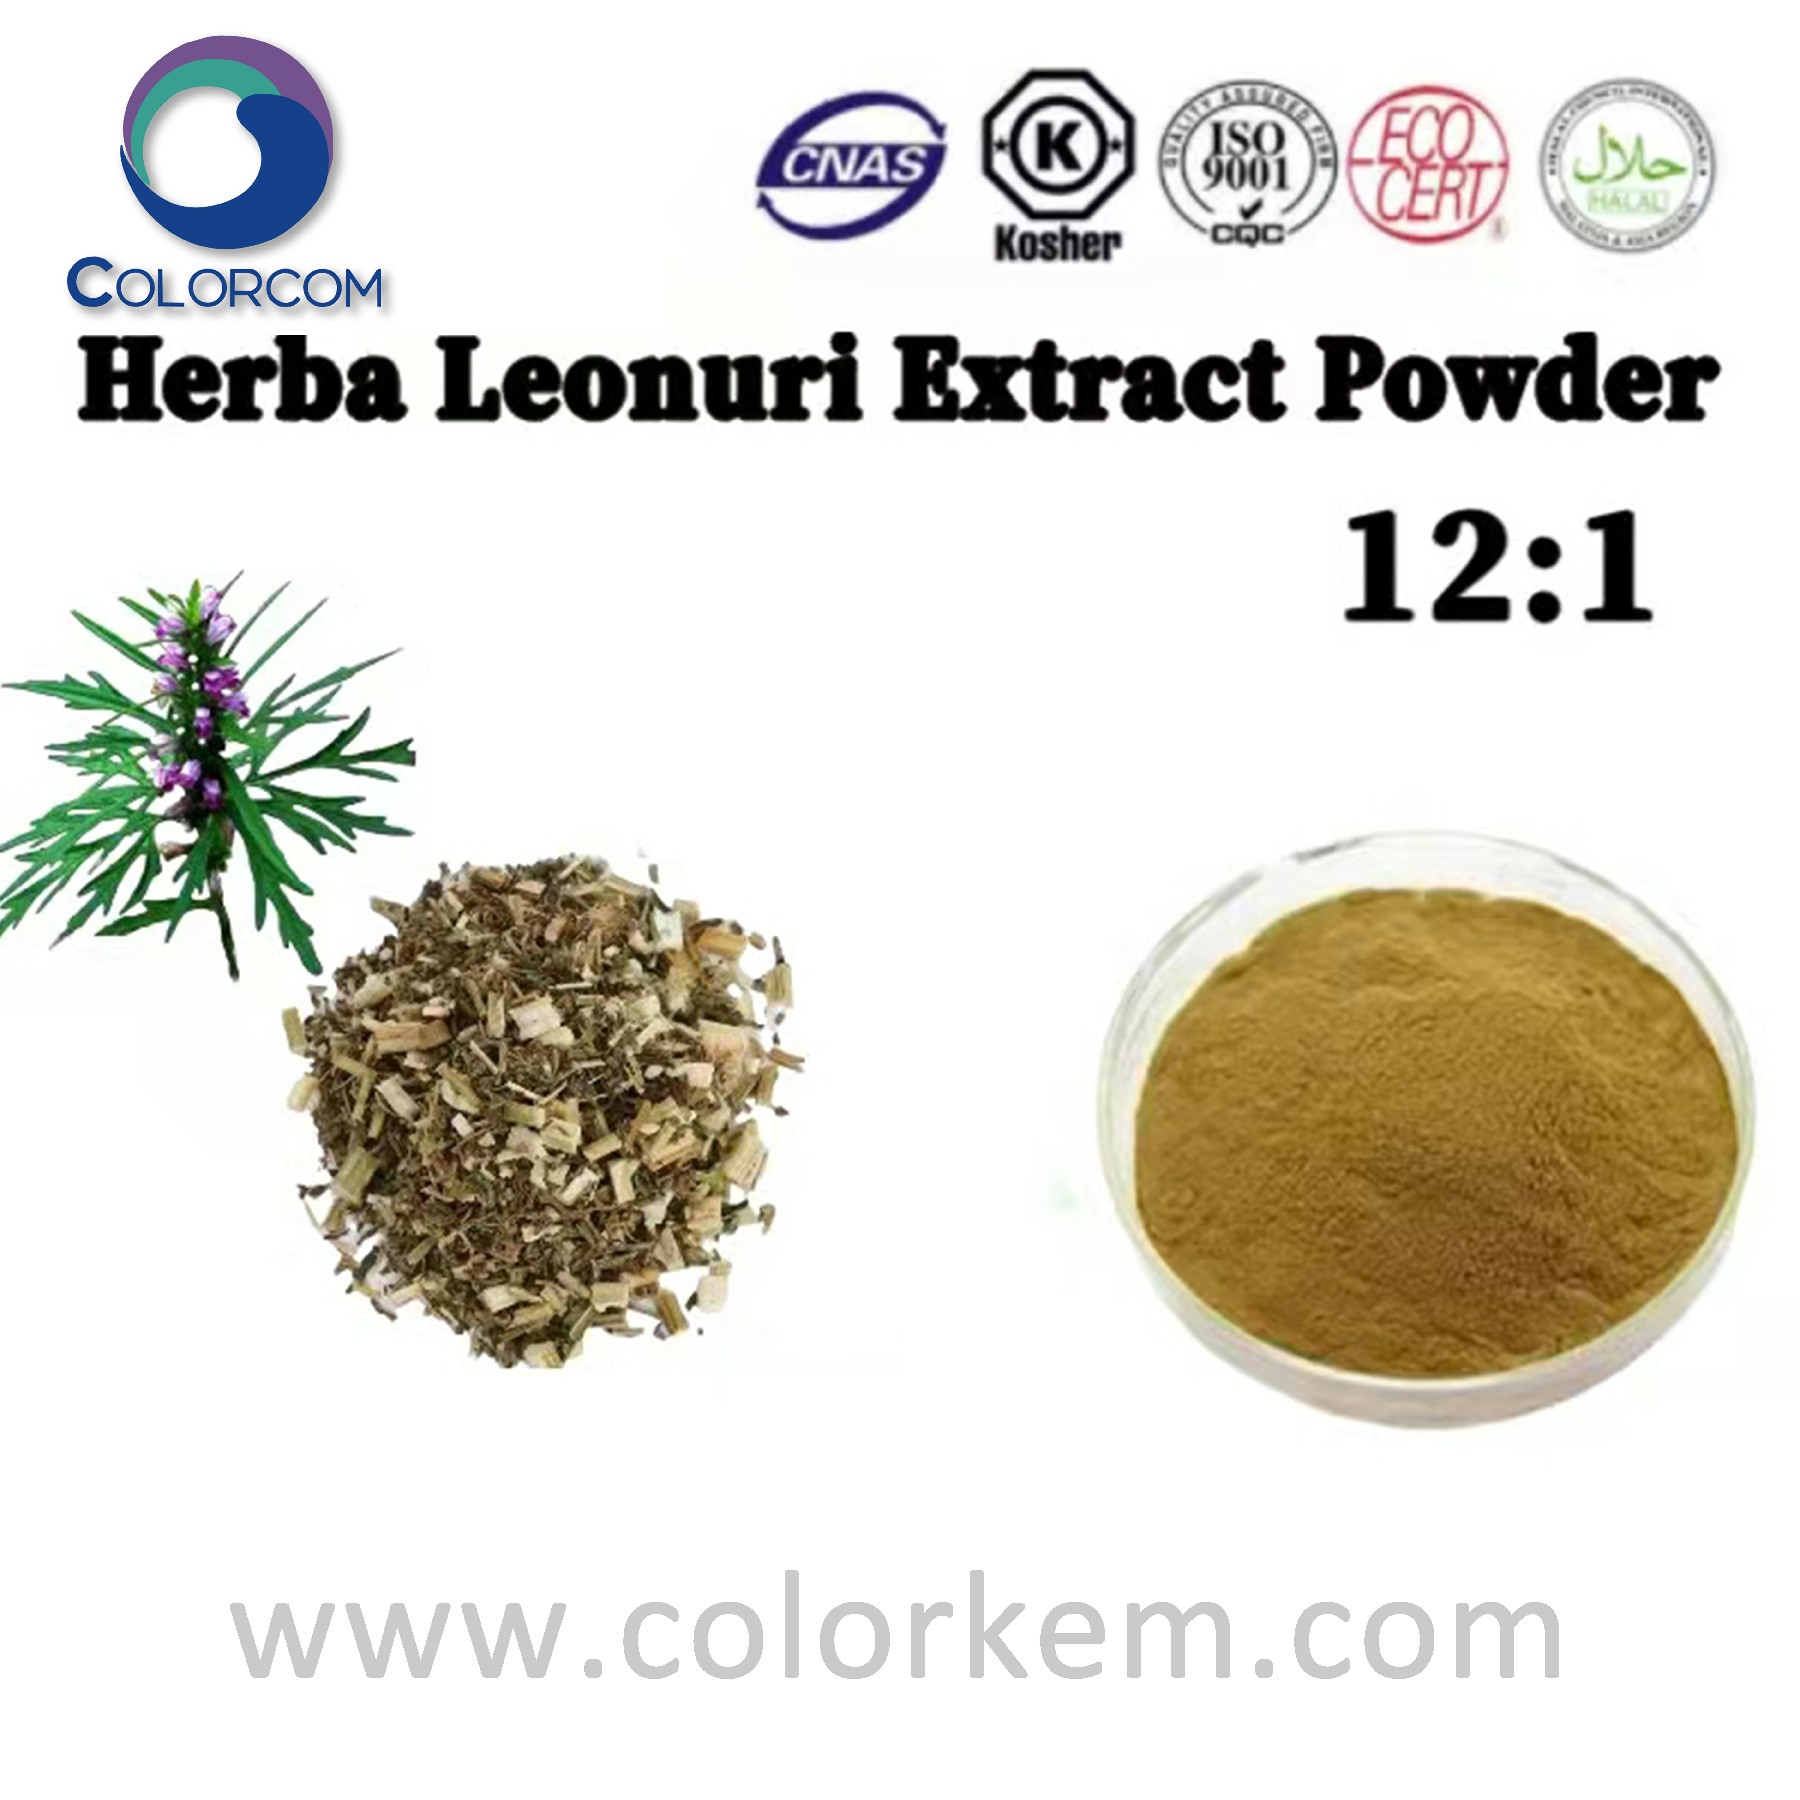 Herba leonuri extract powder